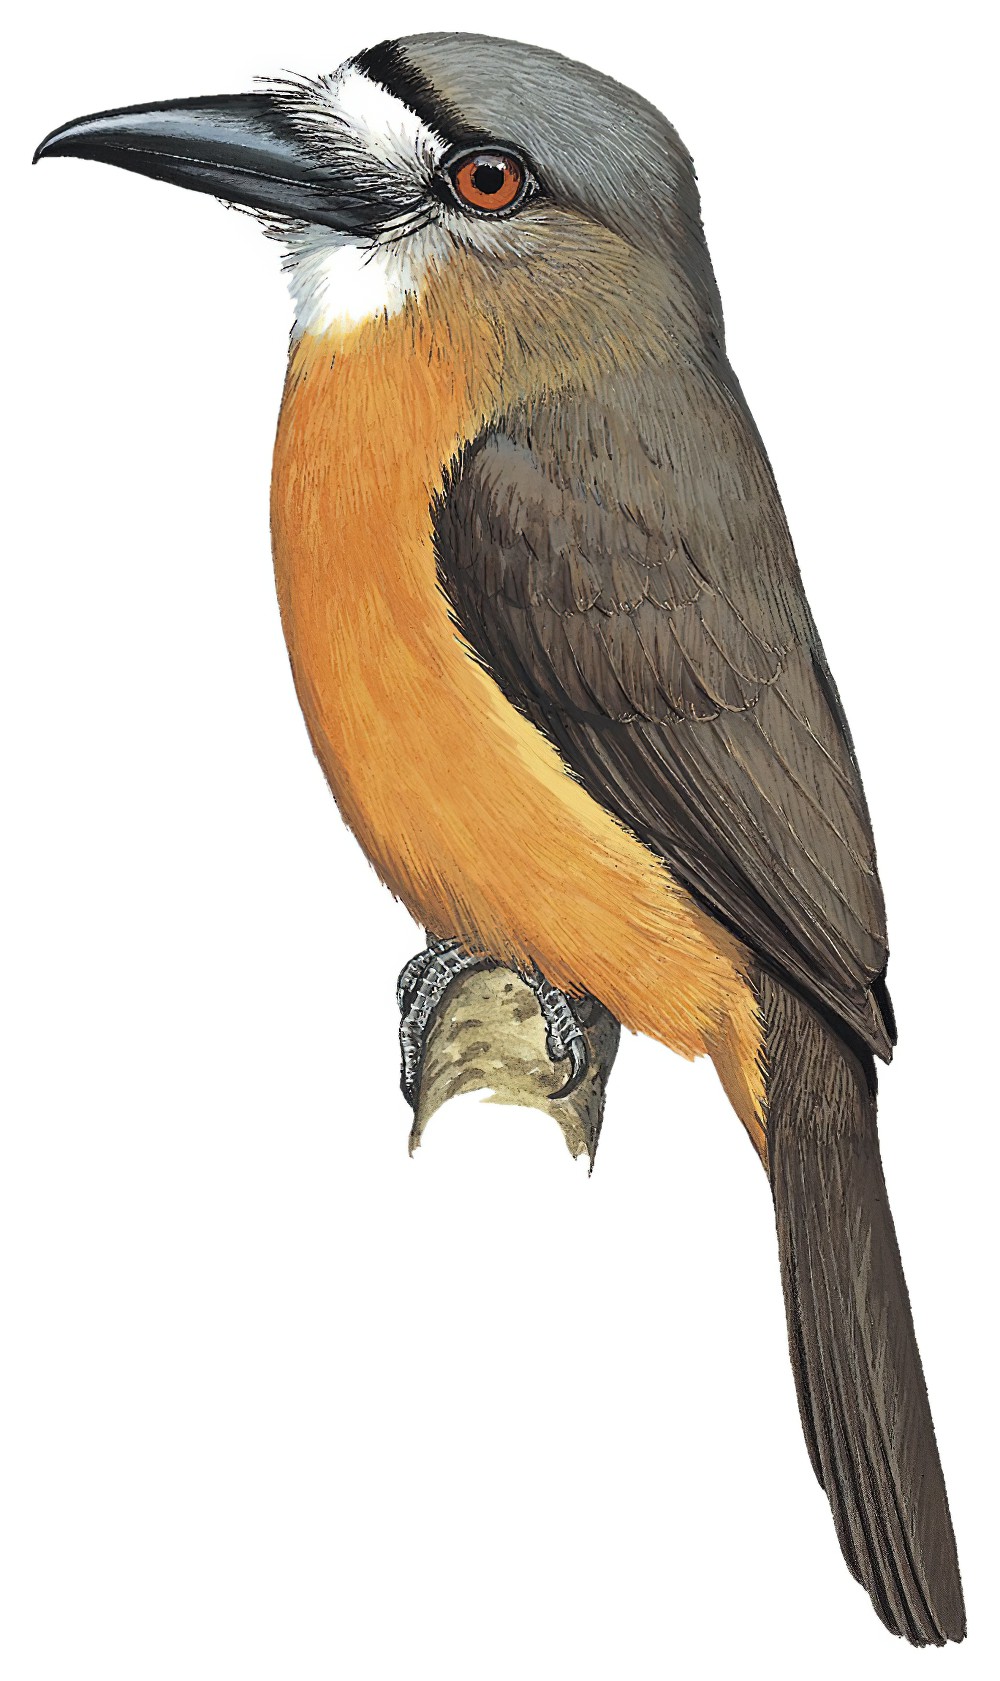 白脸䴕 / White-faced Nunbird / Hapaloptila castanea